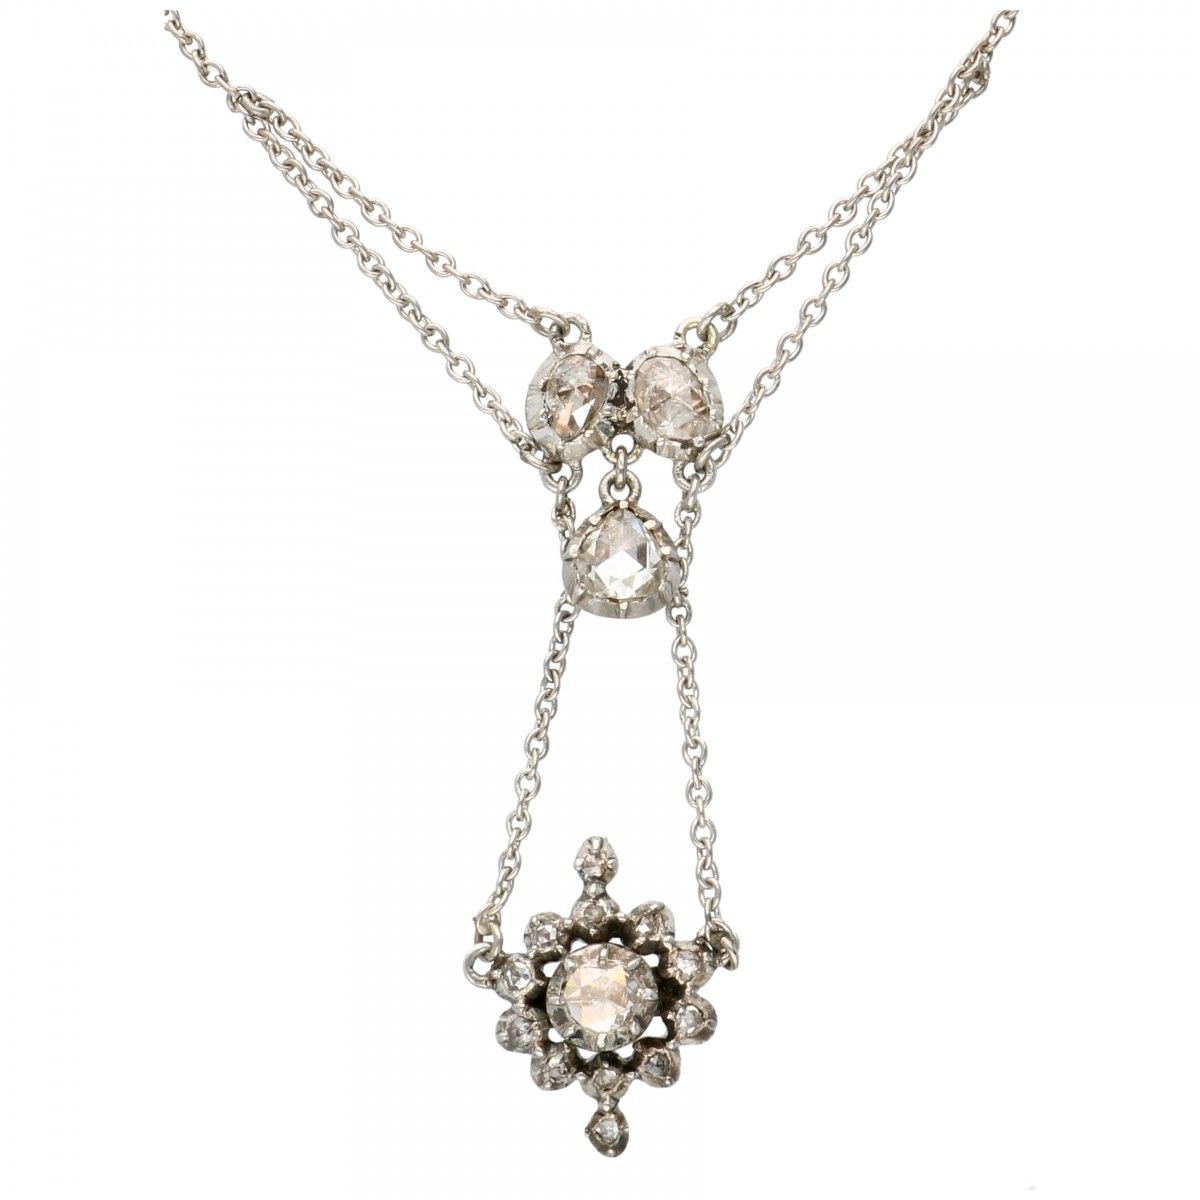 Antique silver necklace set with rose cut diamonds - 925/1000. Mit Sicherheitscl&hellip;